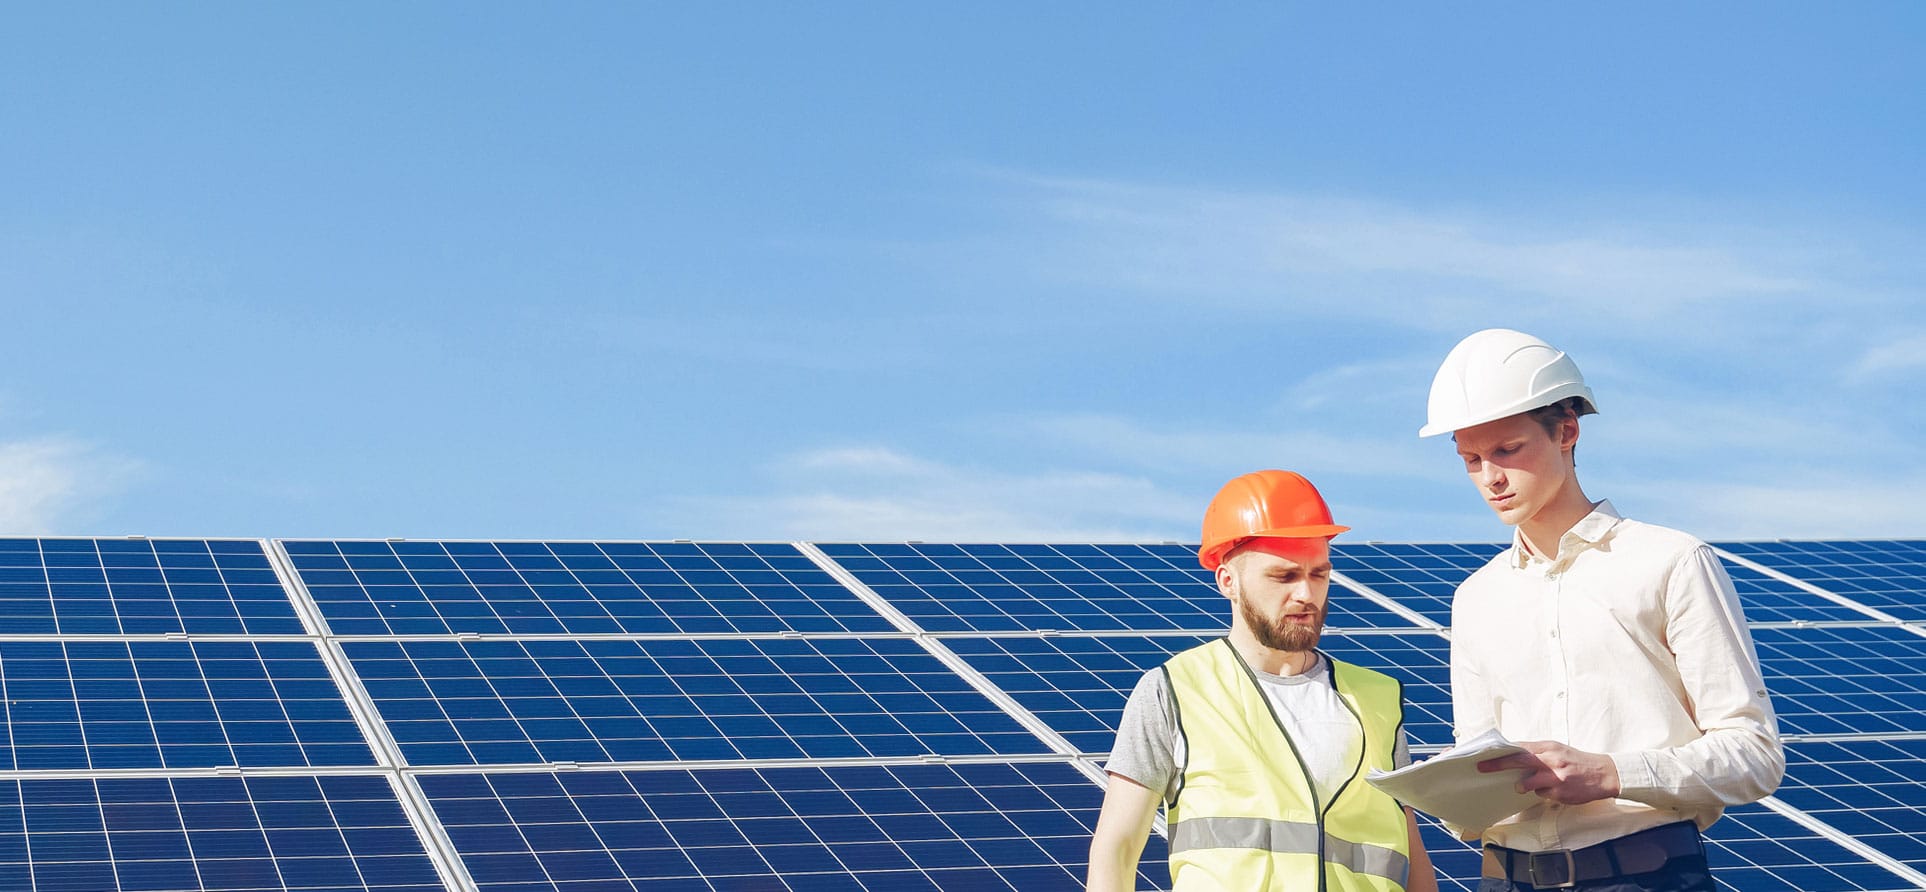 Livefun Solar Tech, Make the Planet Greener